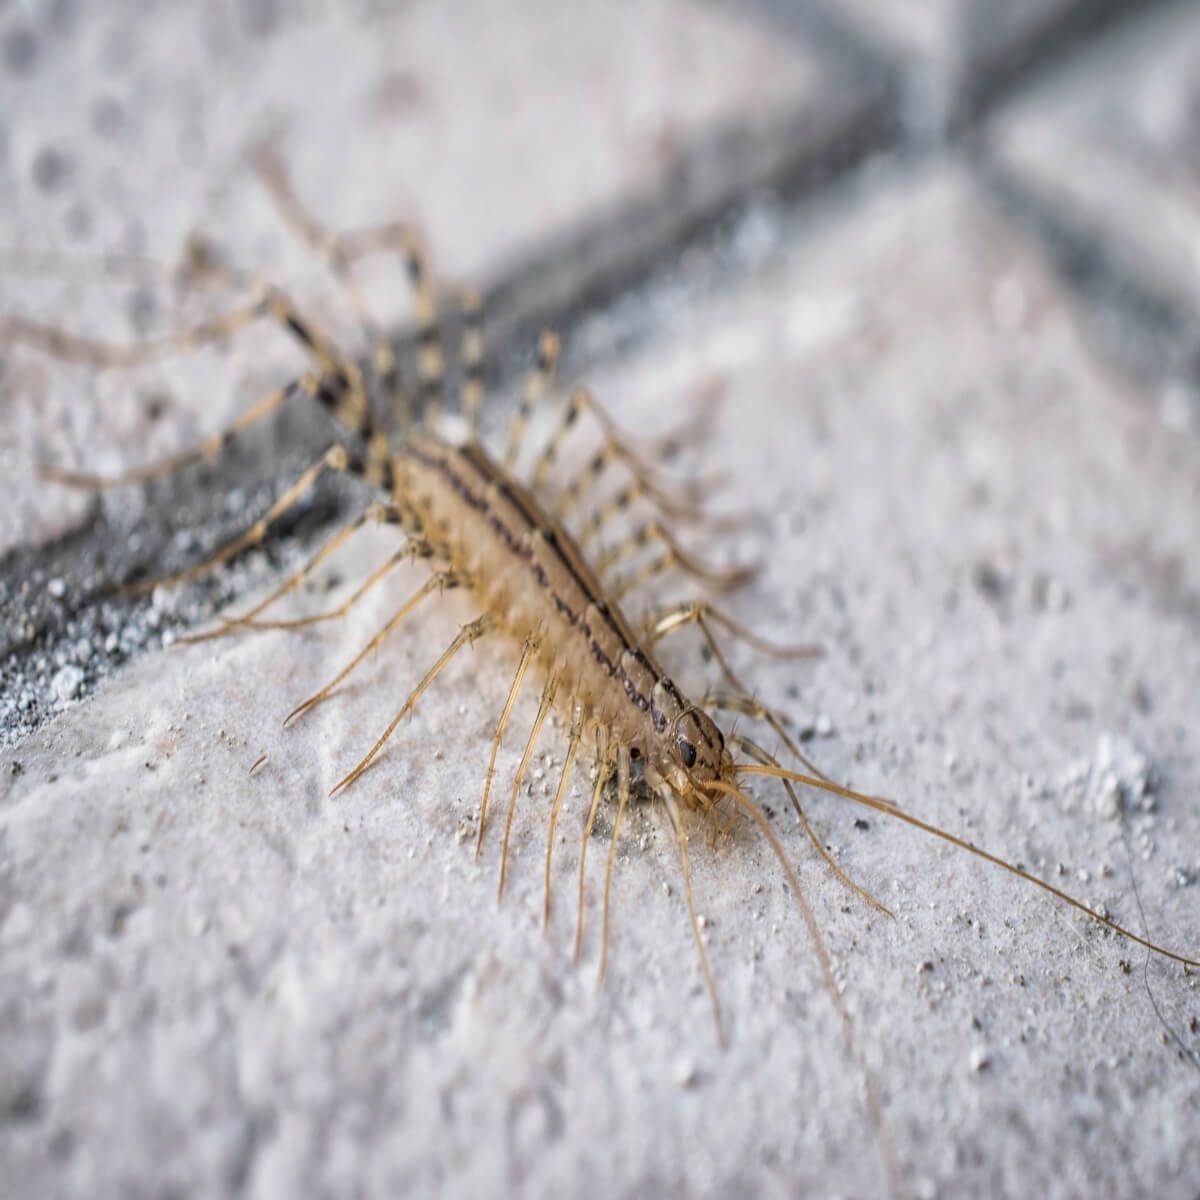 Are Centipedes Poisonous?